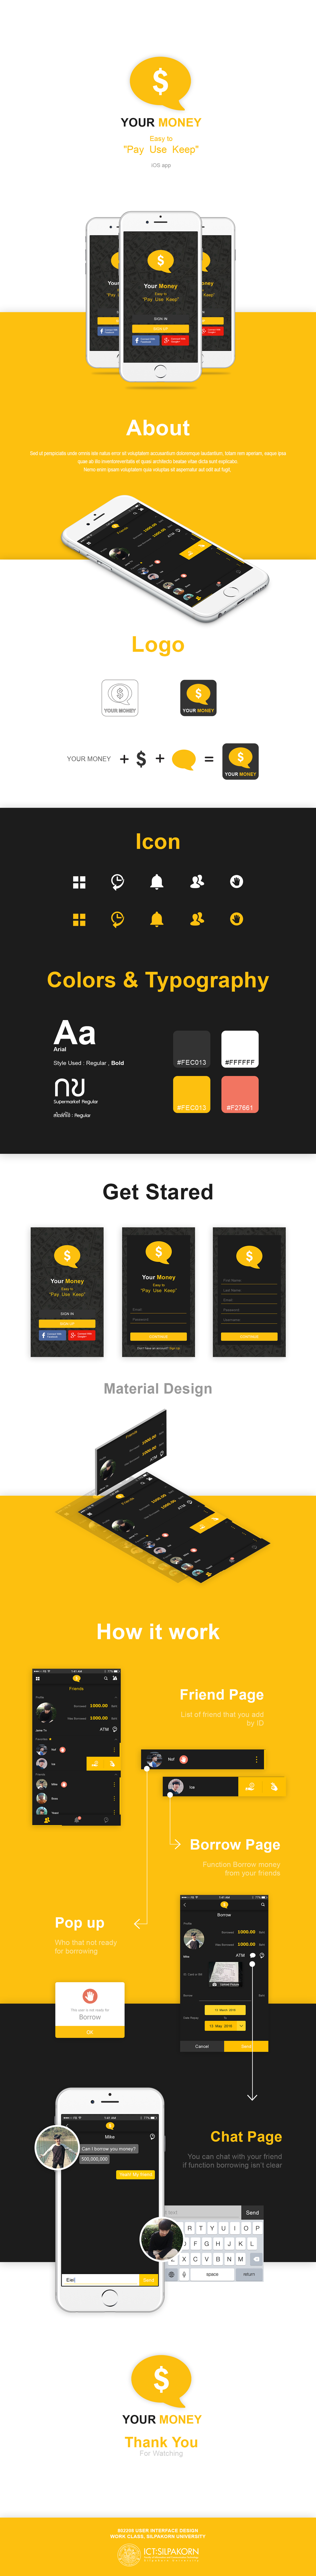 UI Design application